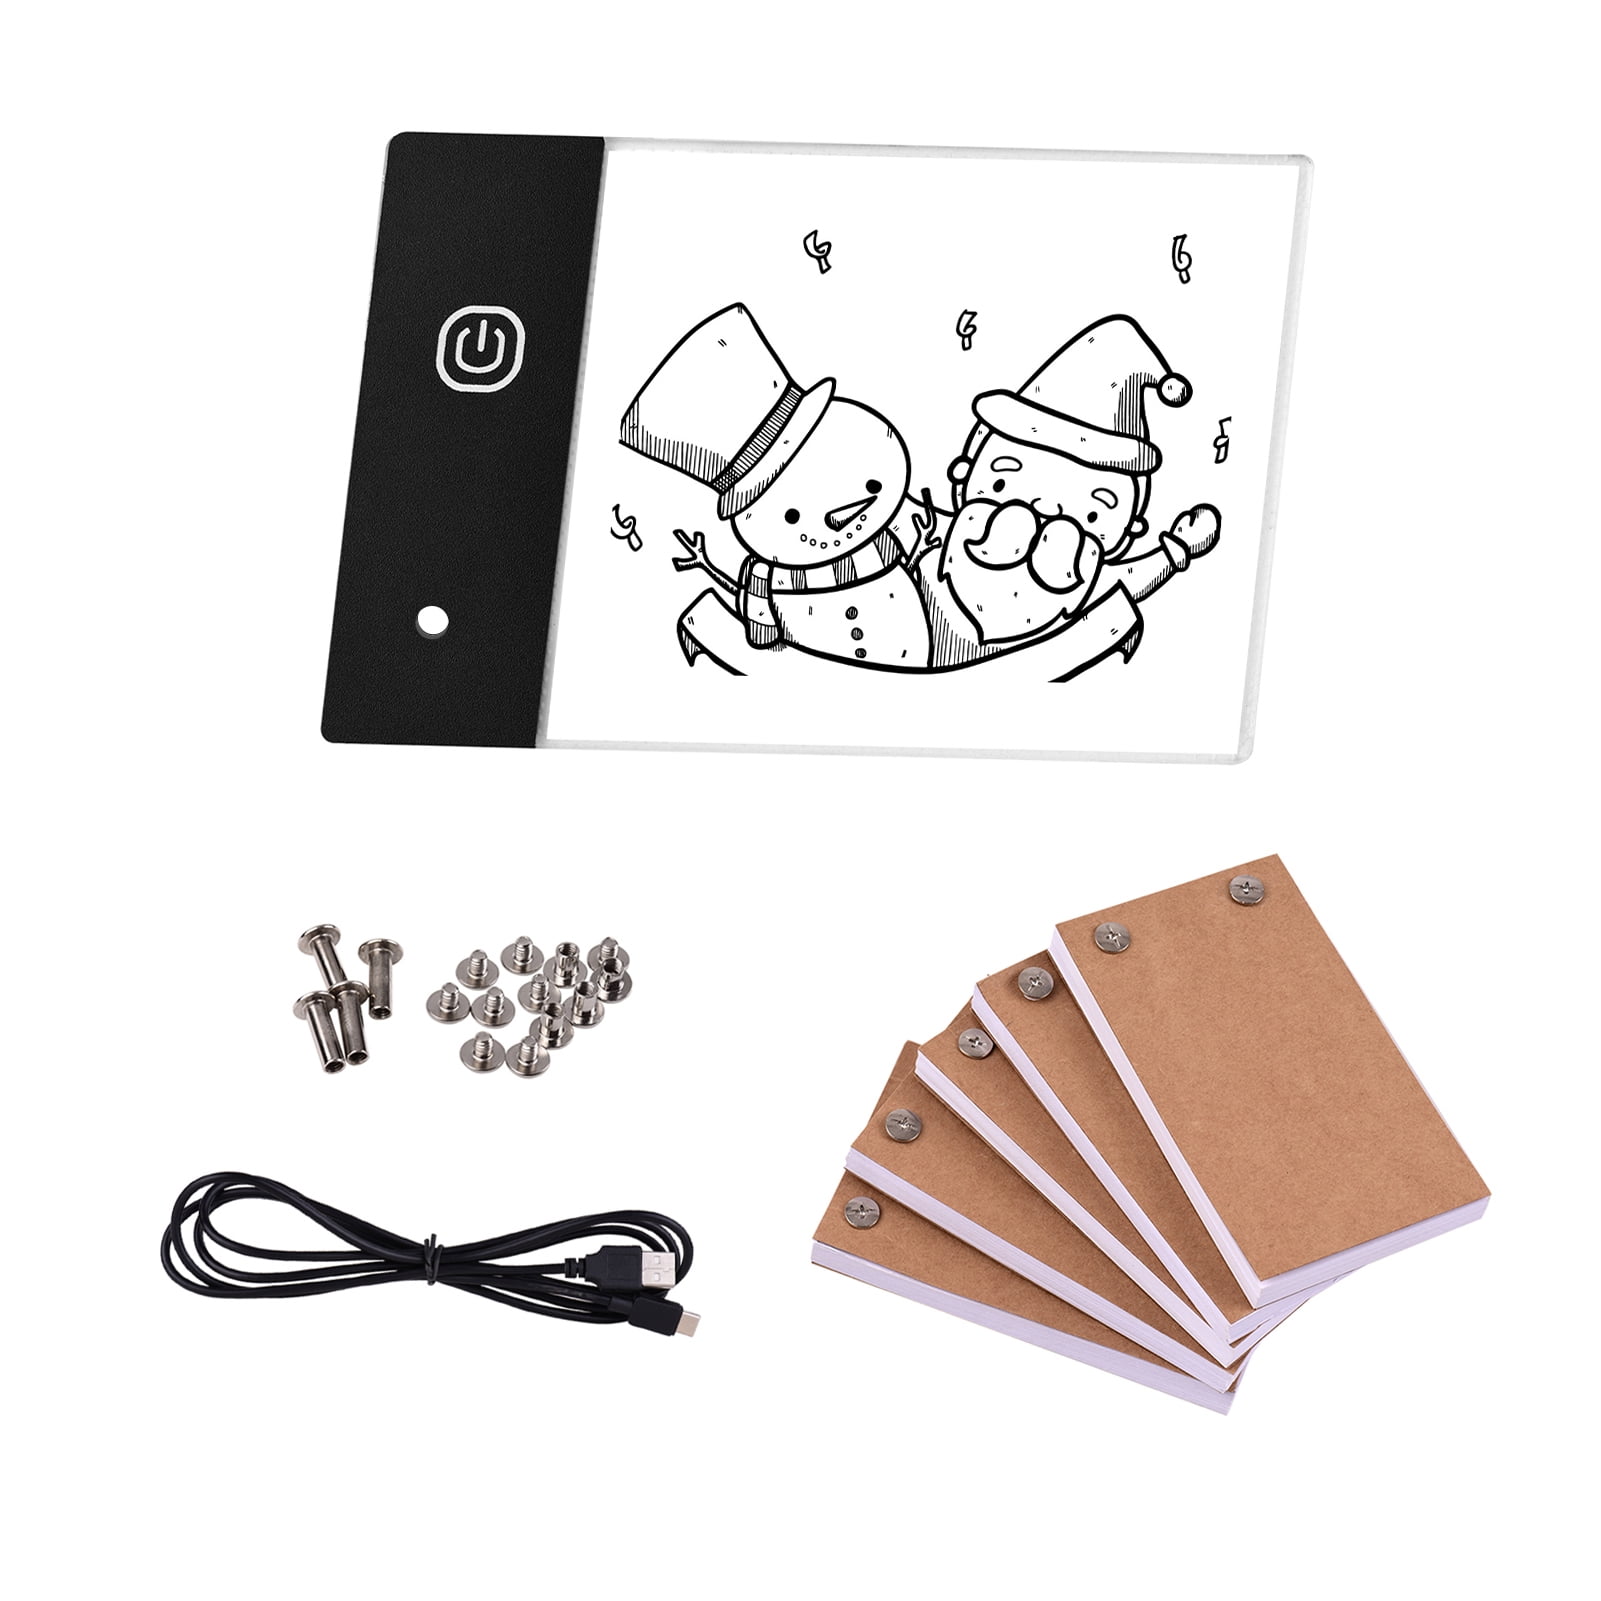 Carevas Flip Book Kit with Pad Hole Design 3 Level Brightness